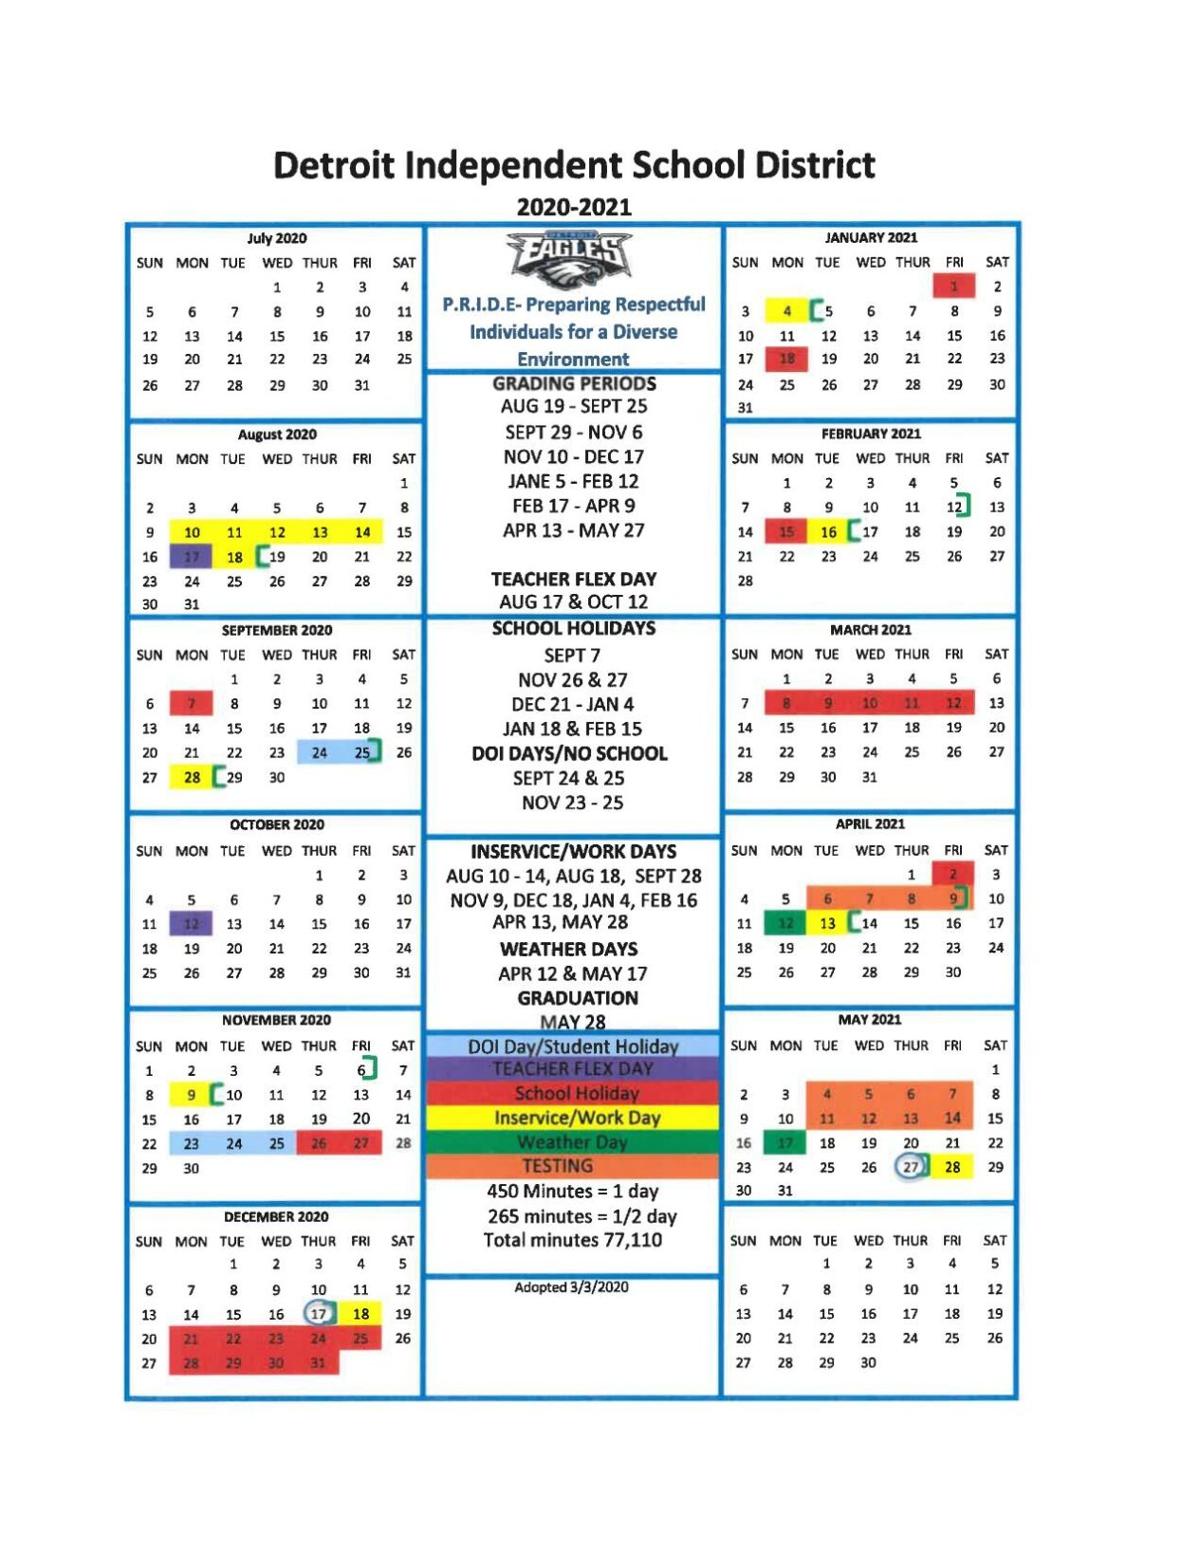 Detroit ISD School Calendar 202021